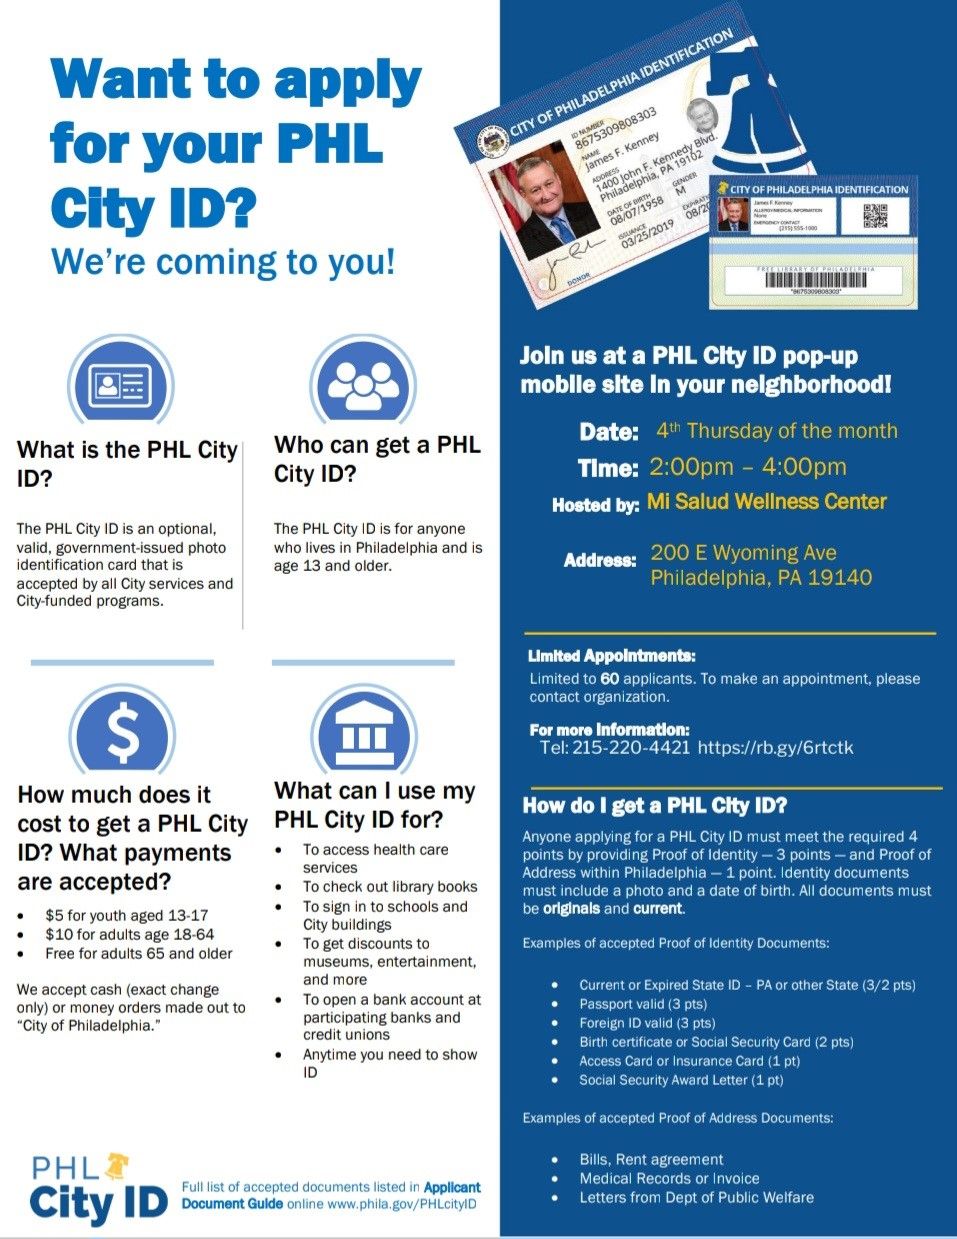 PHL city ID